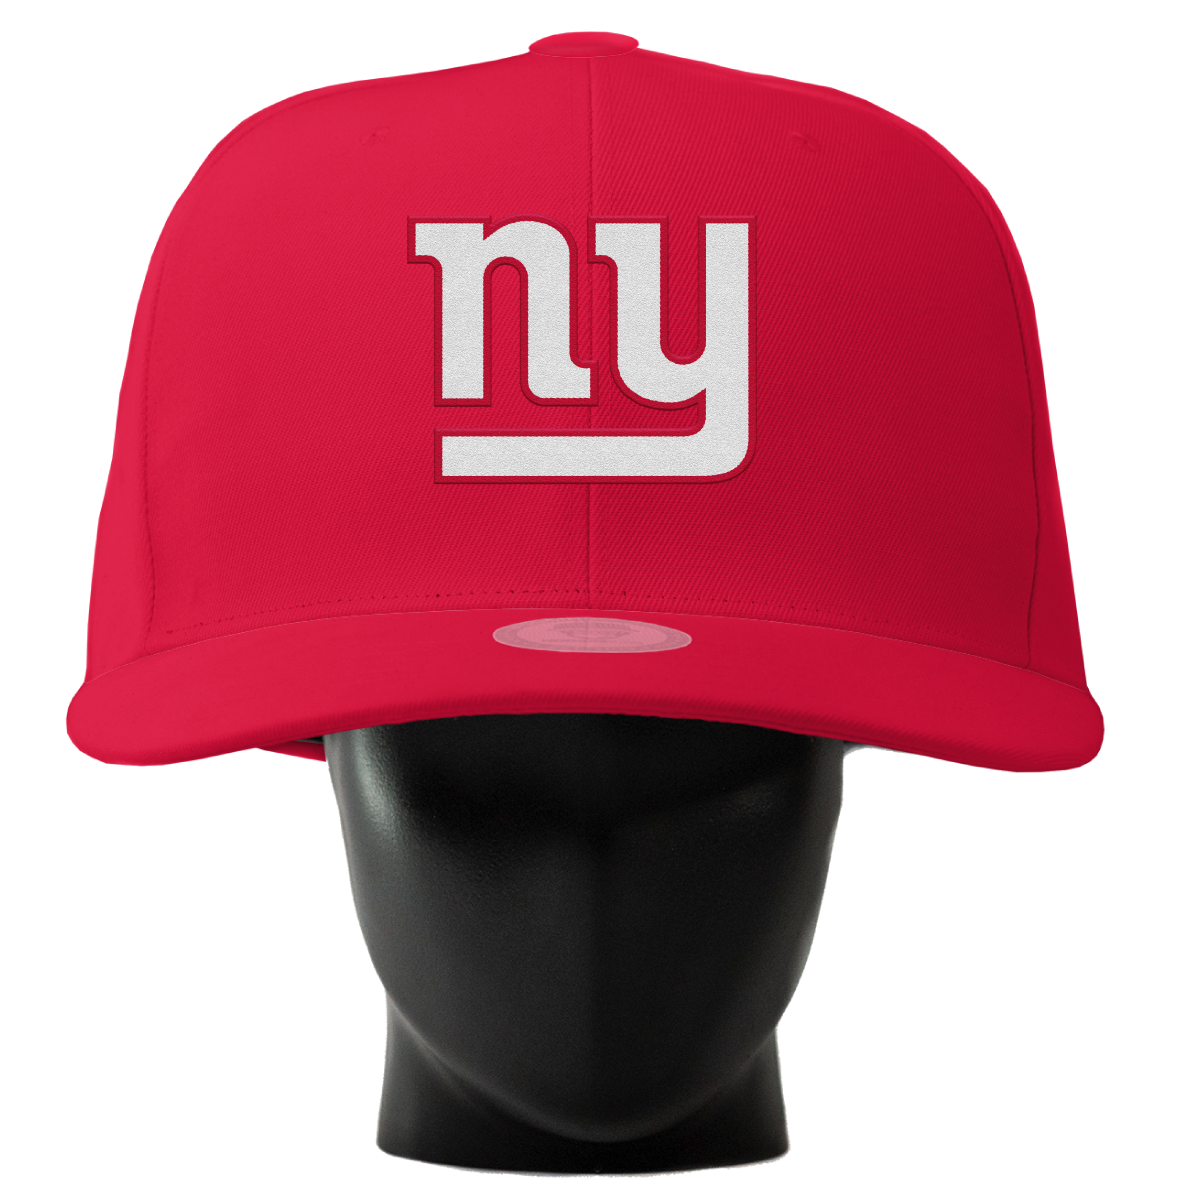 New York Giants Officially Licensed Hard Hat 